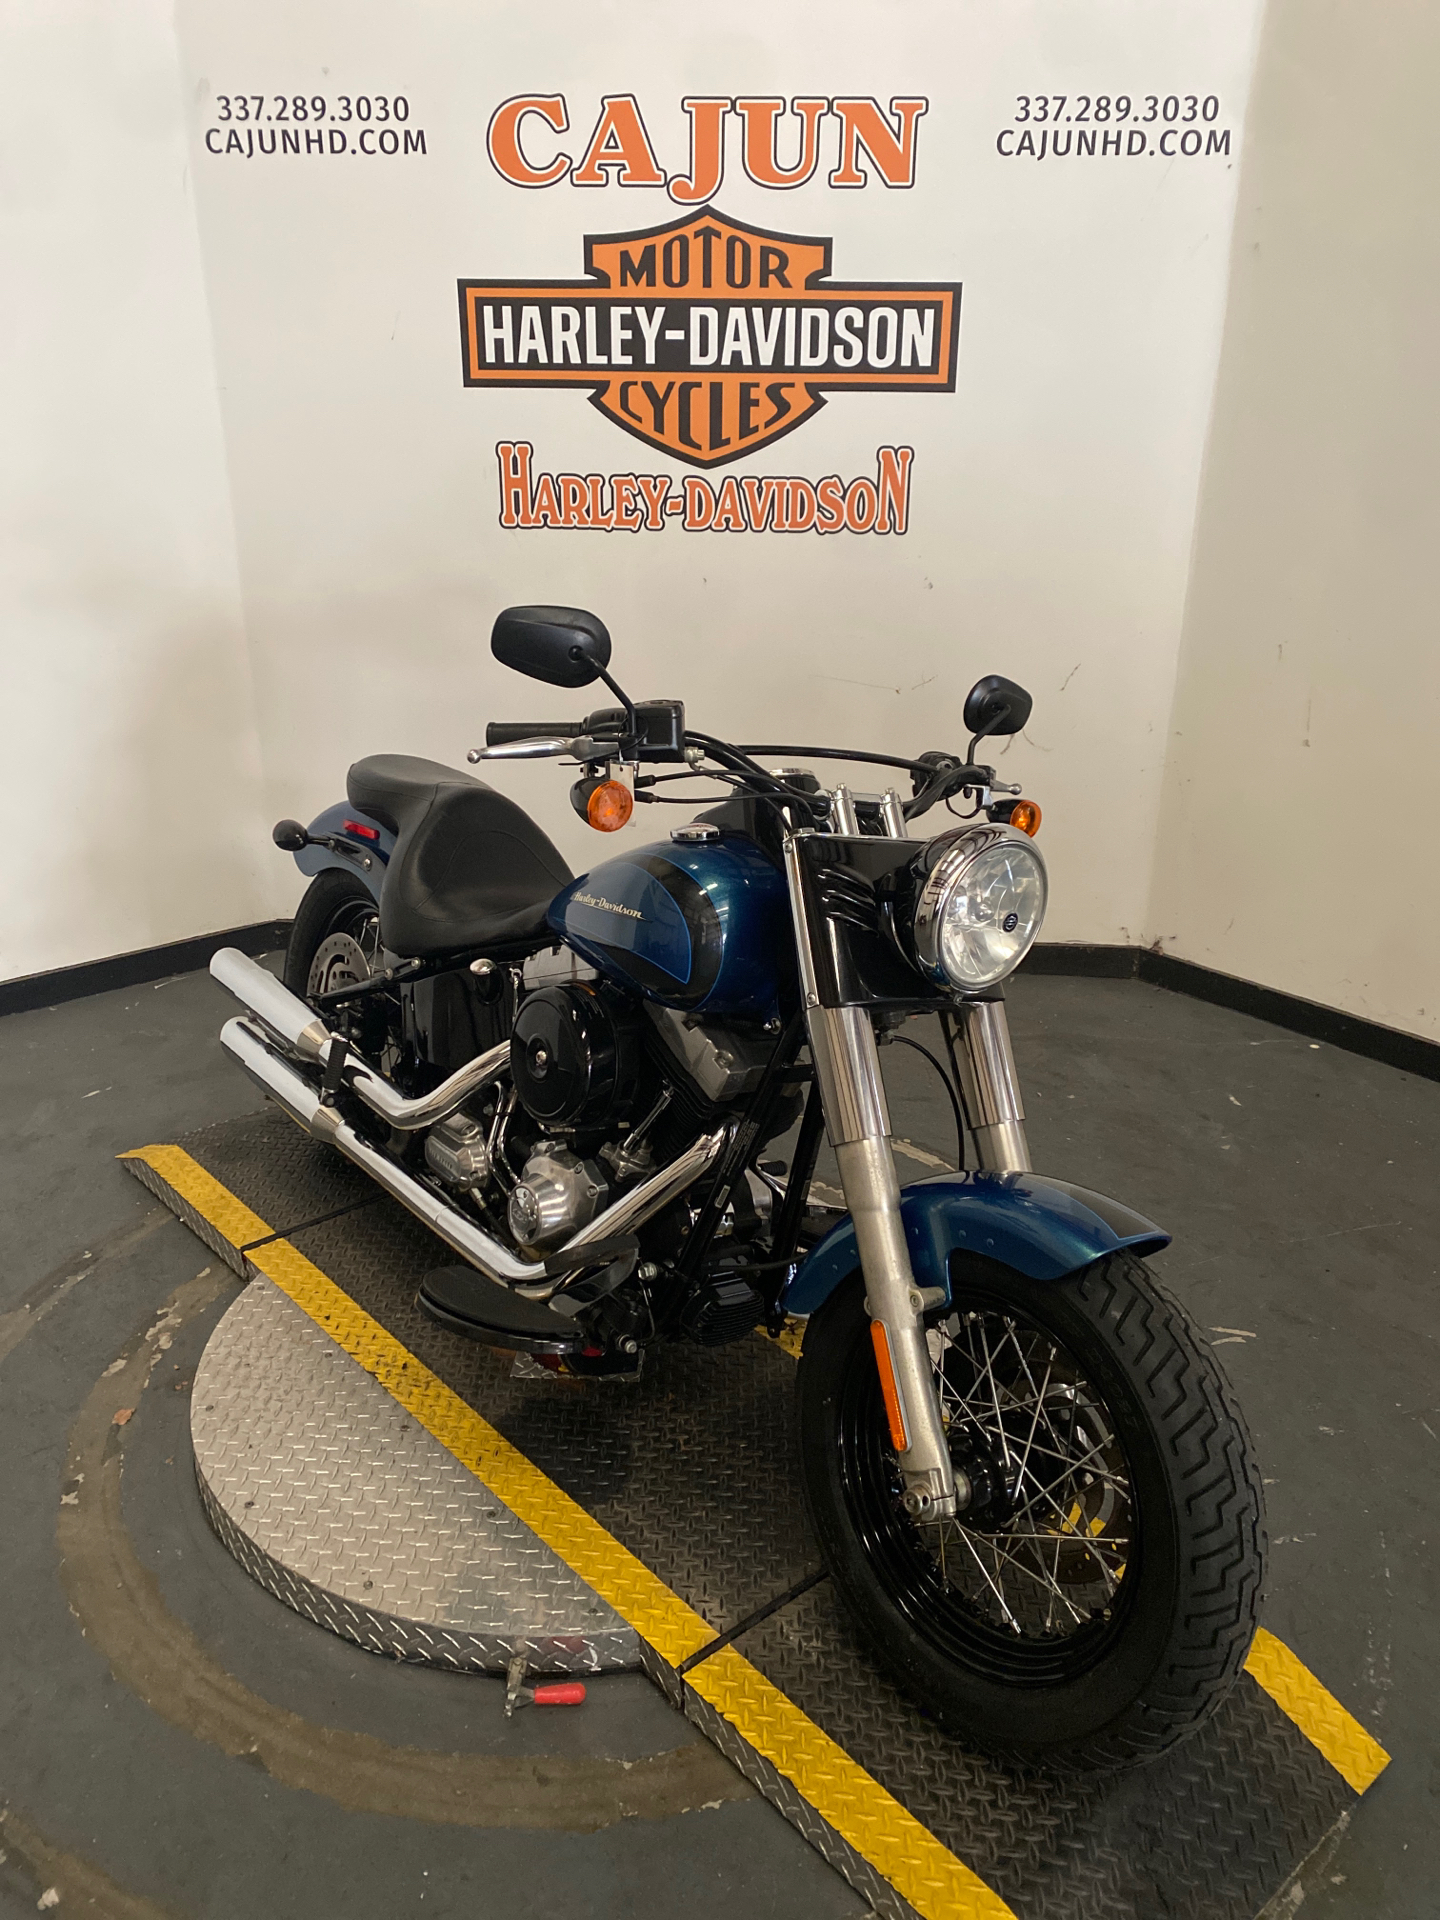 2014 Harley-Davidson Softail Slim used - Photo 6